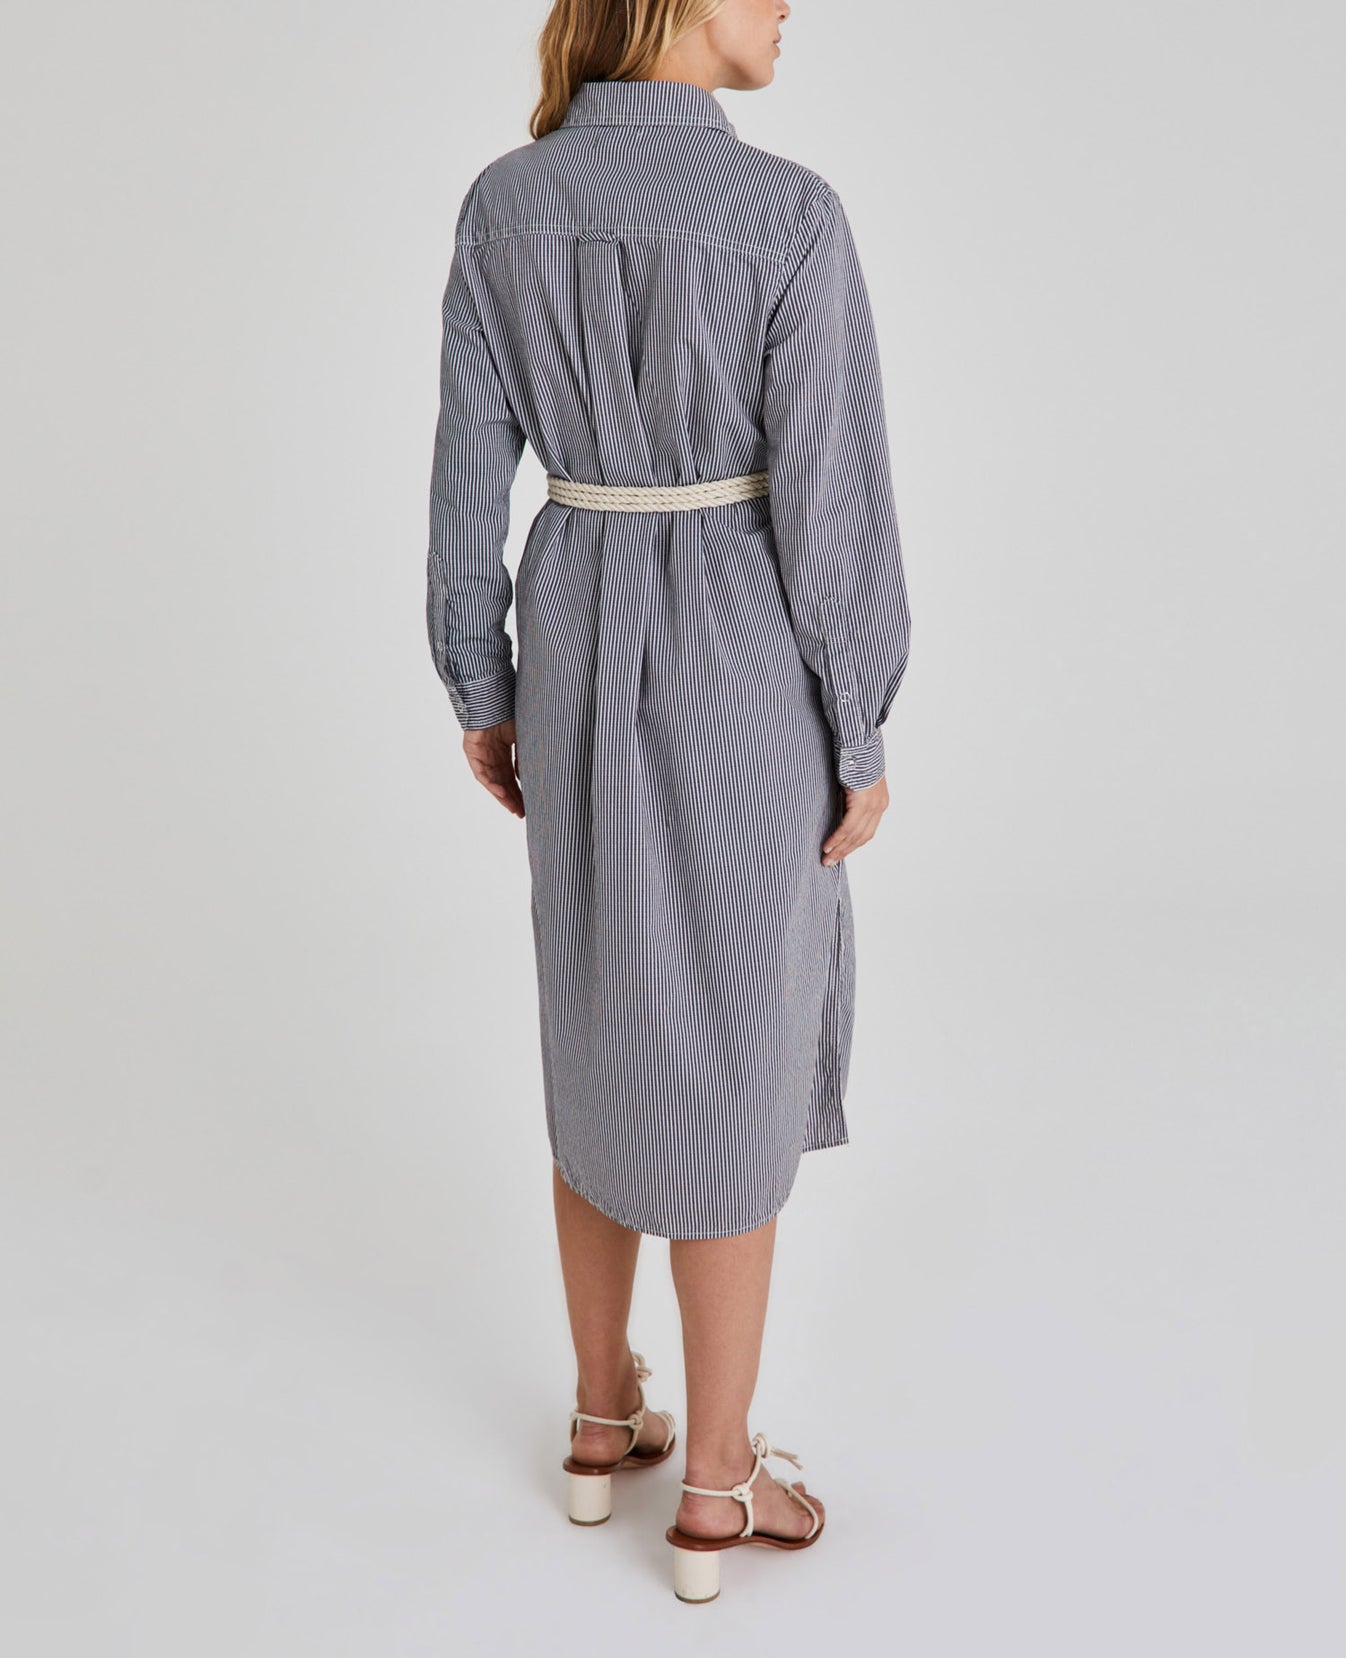 Taylor Dress Carlisle Stripe-Indigo Workwear Dress Women Onepiece Photo 4